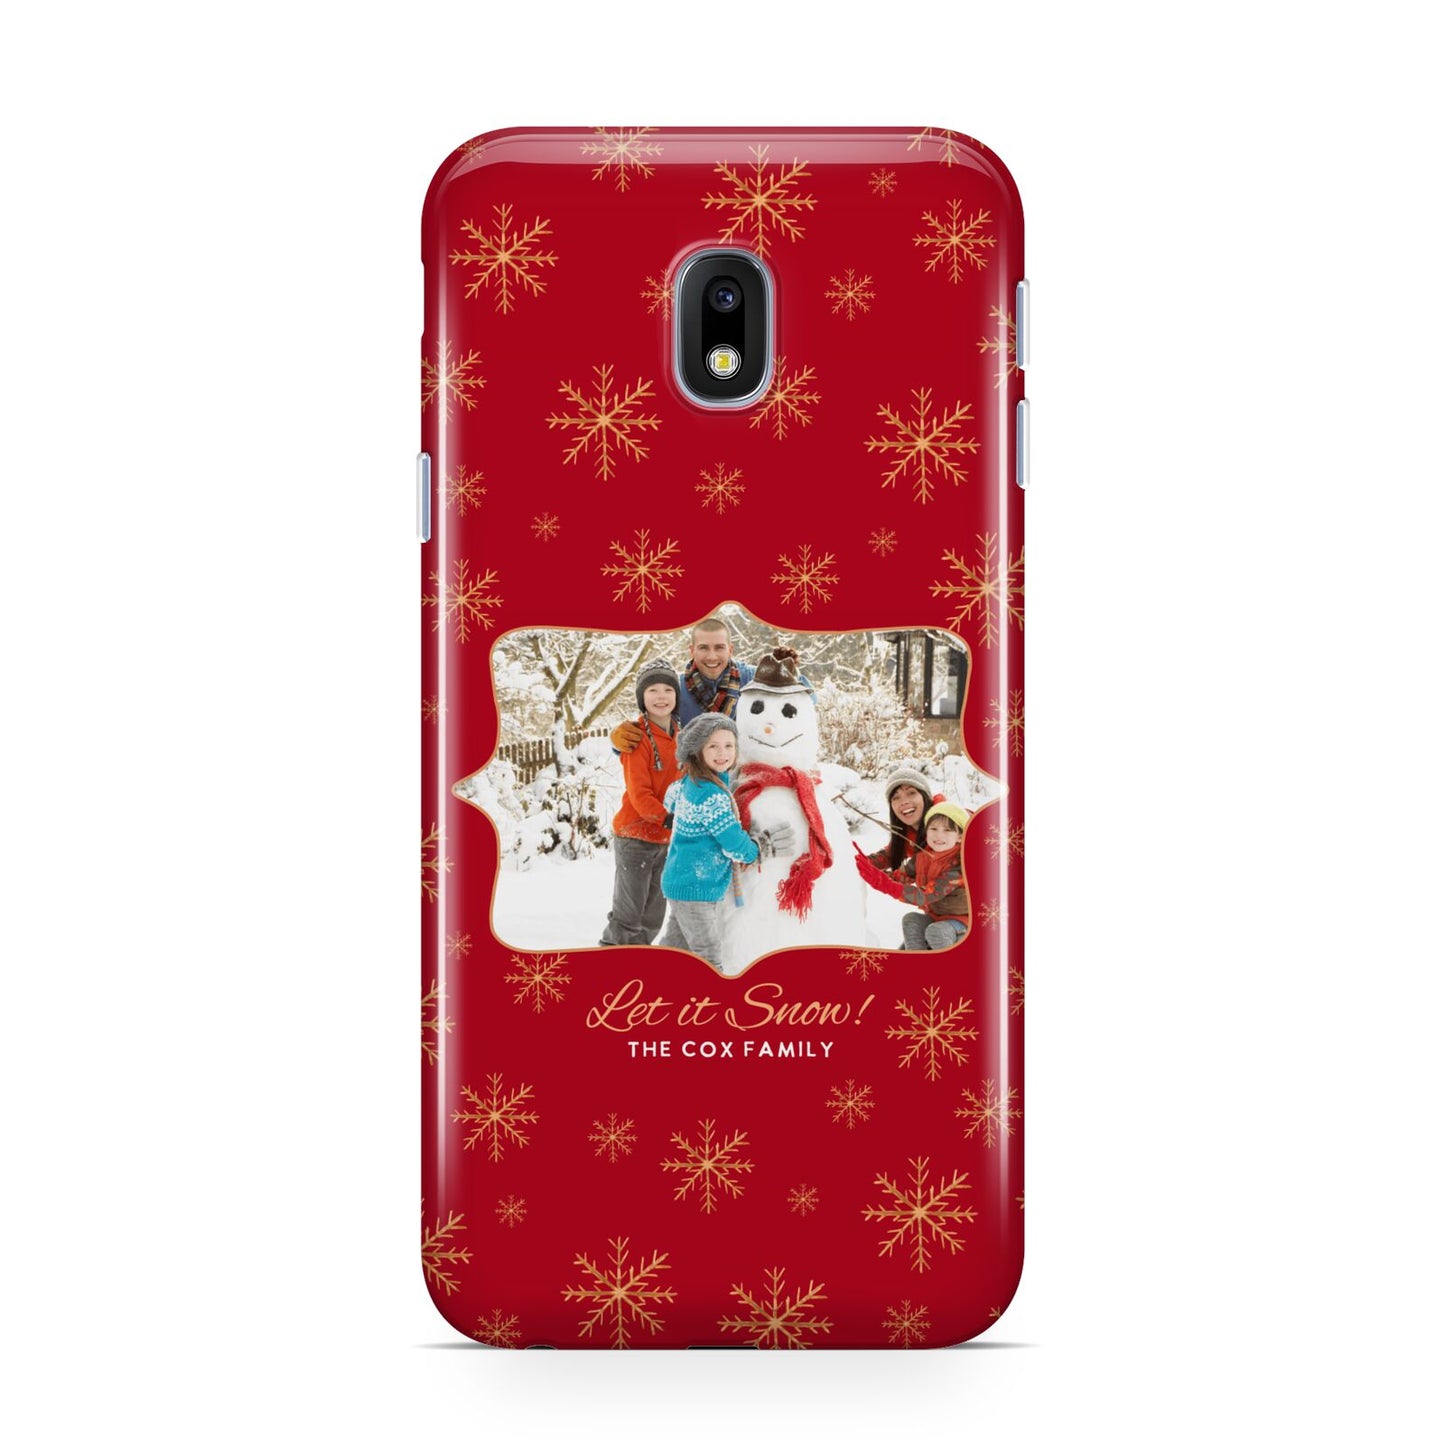 Let it Snow Christmas Photo Upload Samsung Galaxy J3 2017 Case